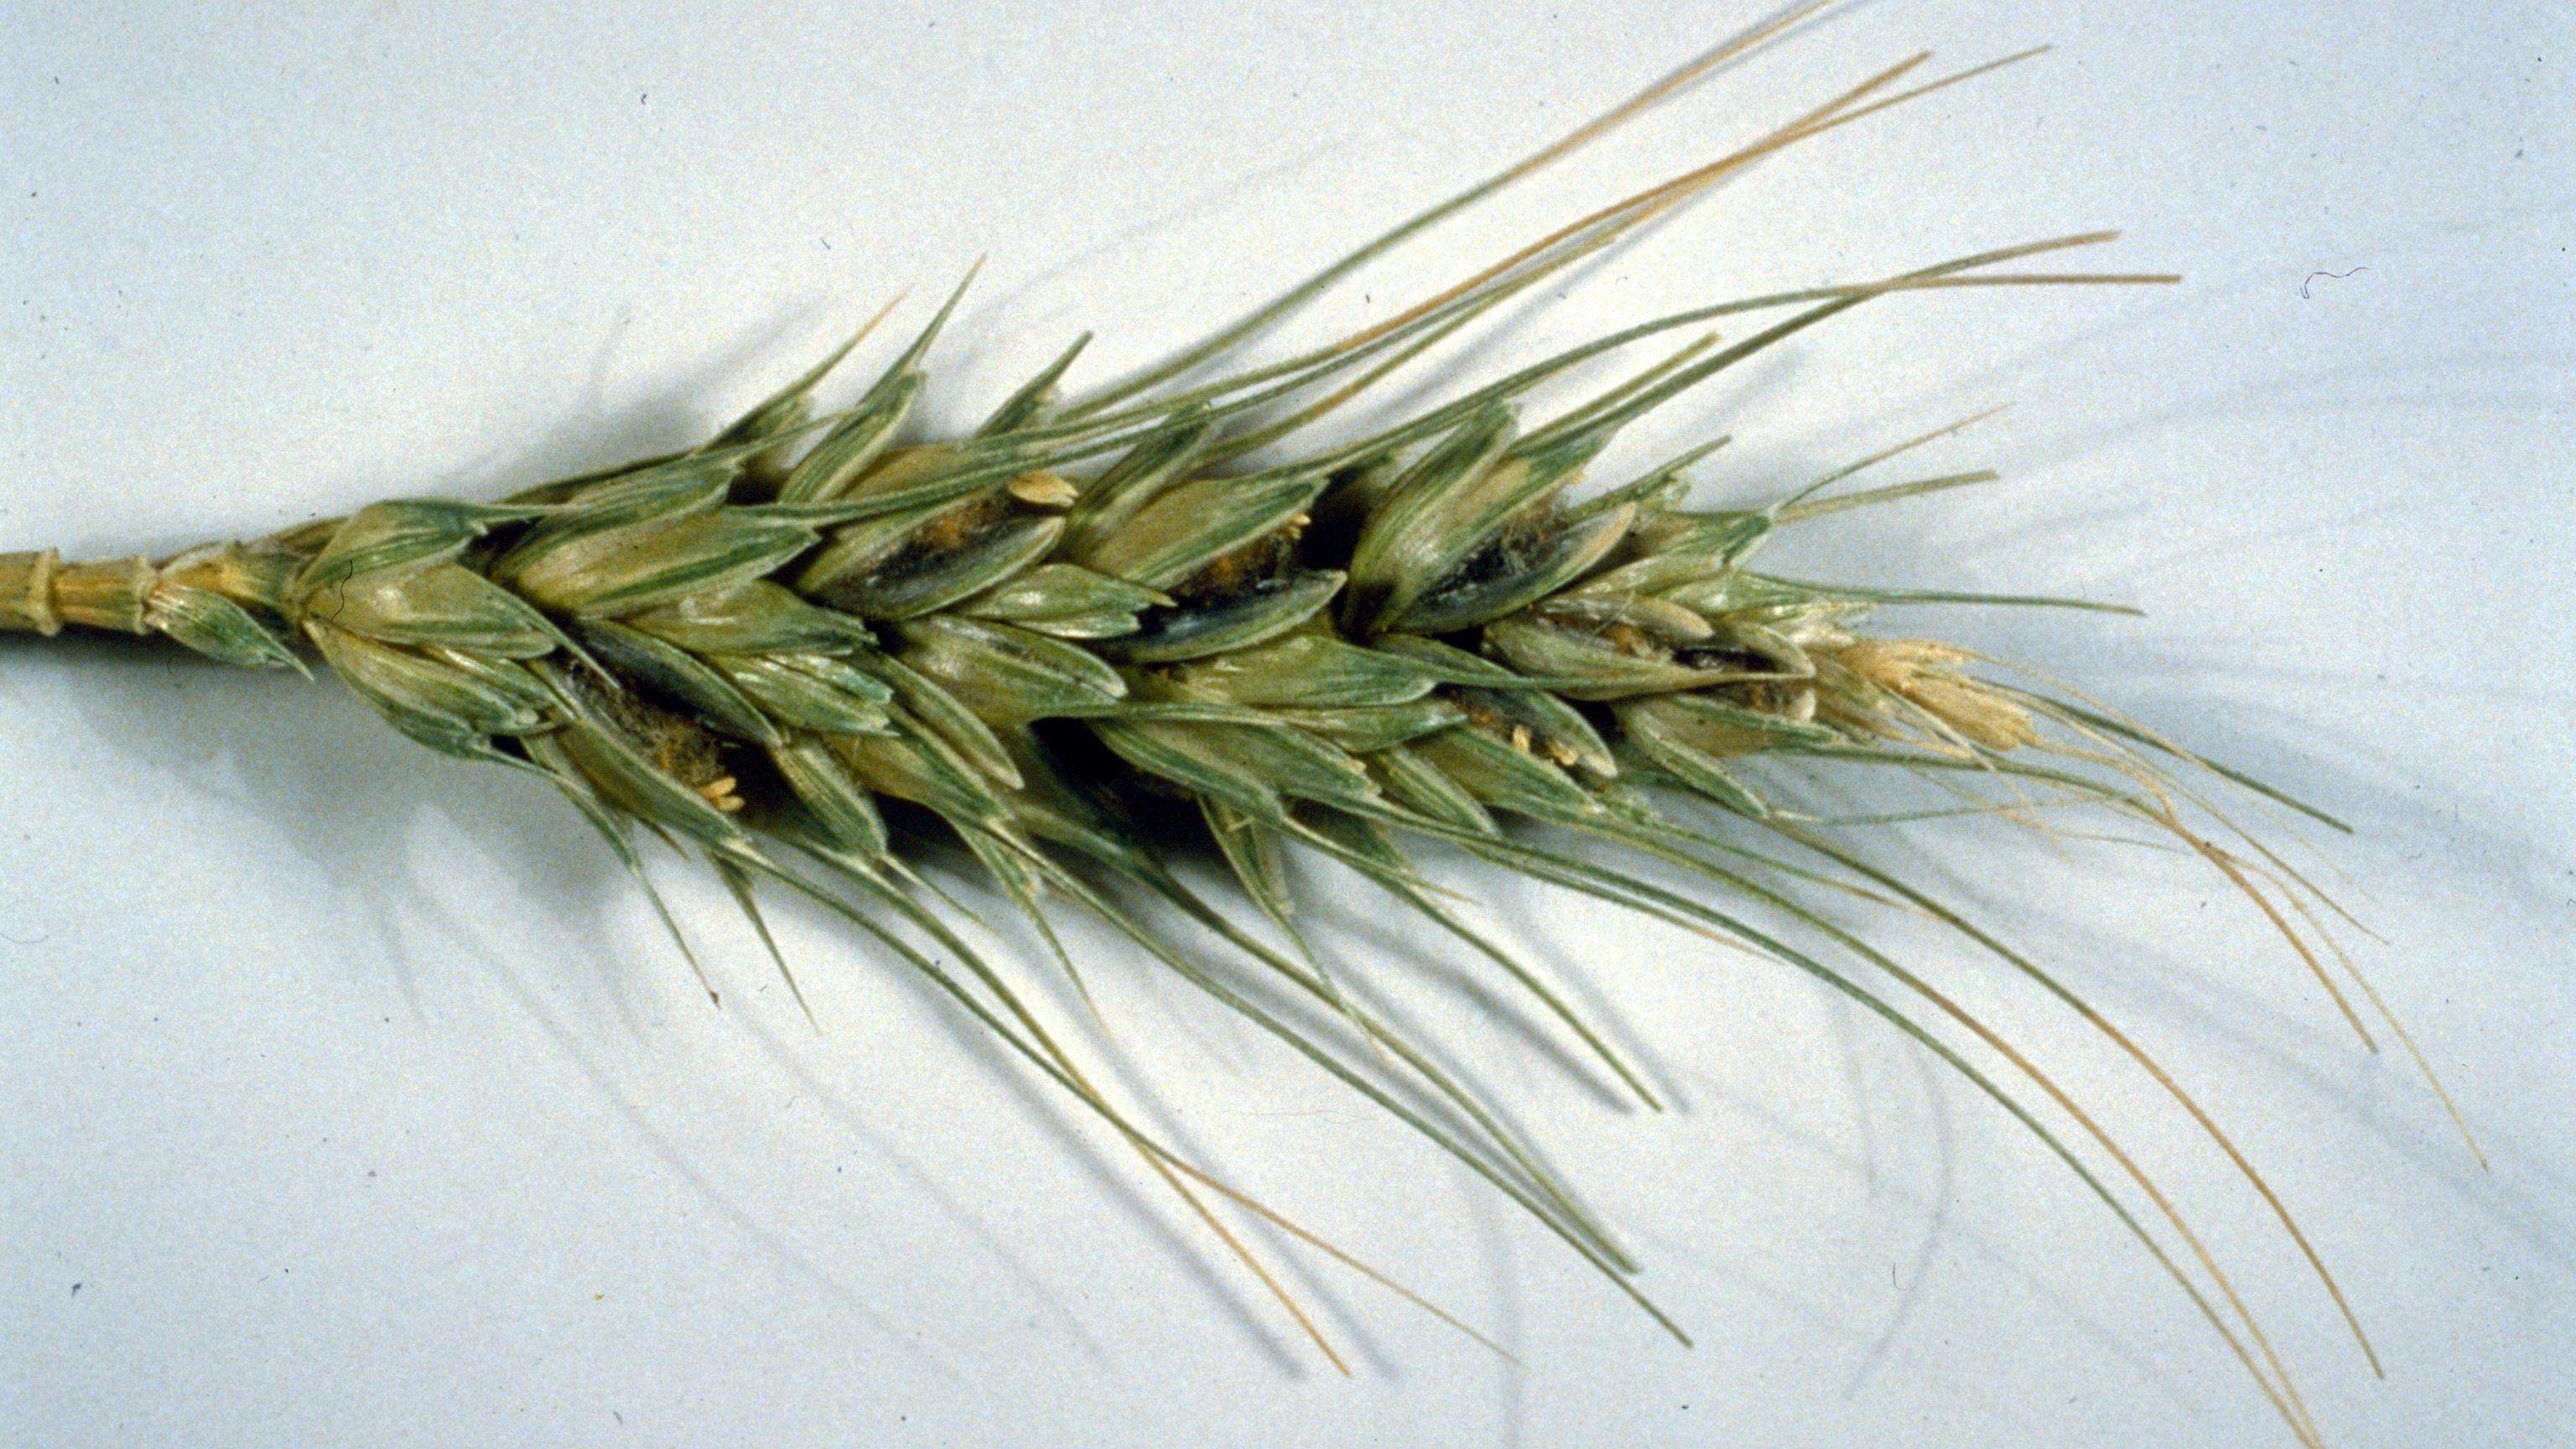 Bunted ear (Tilletia indica) of wheat.